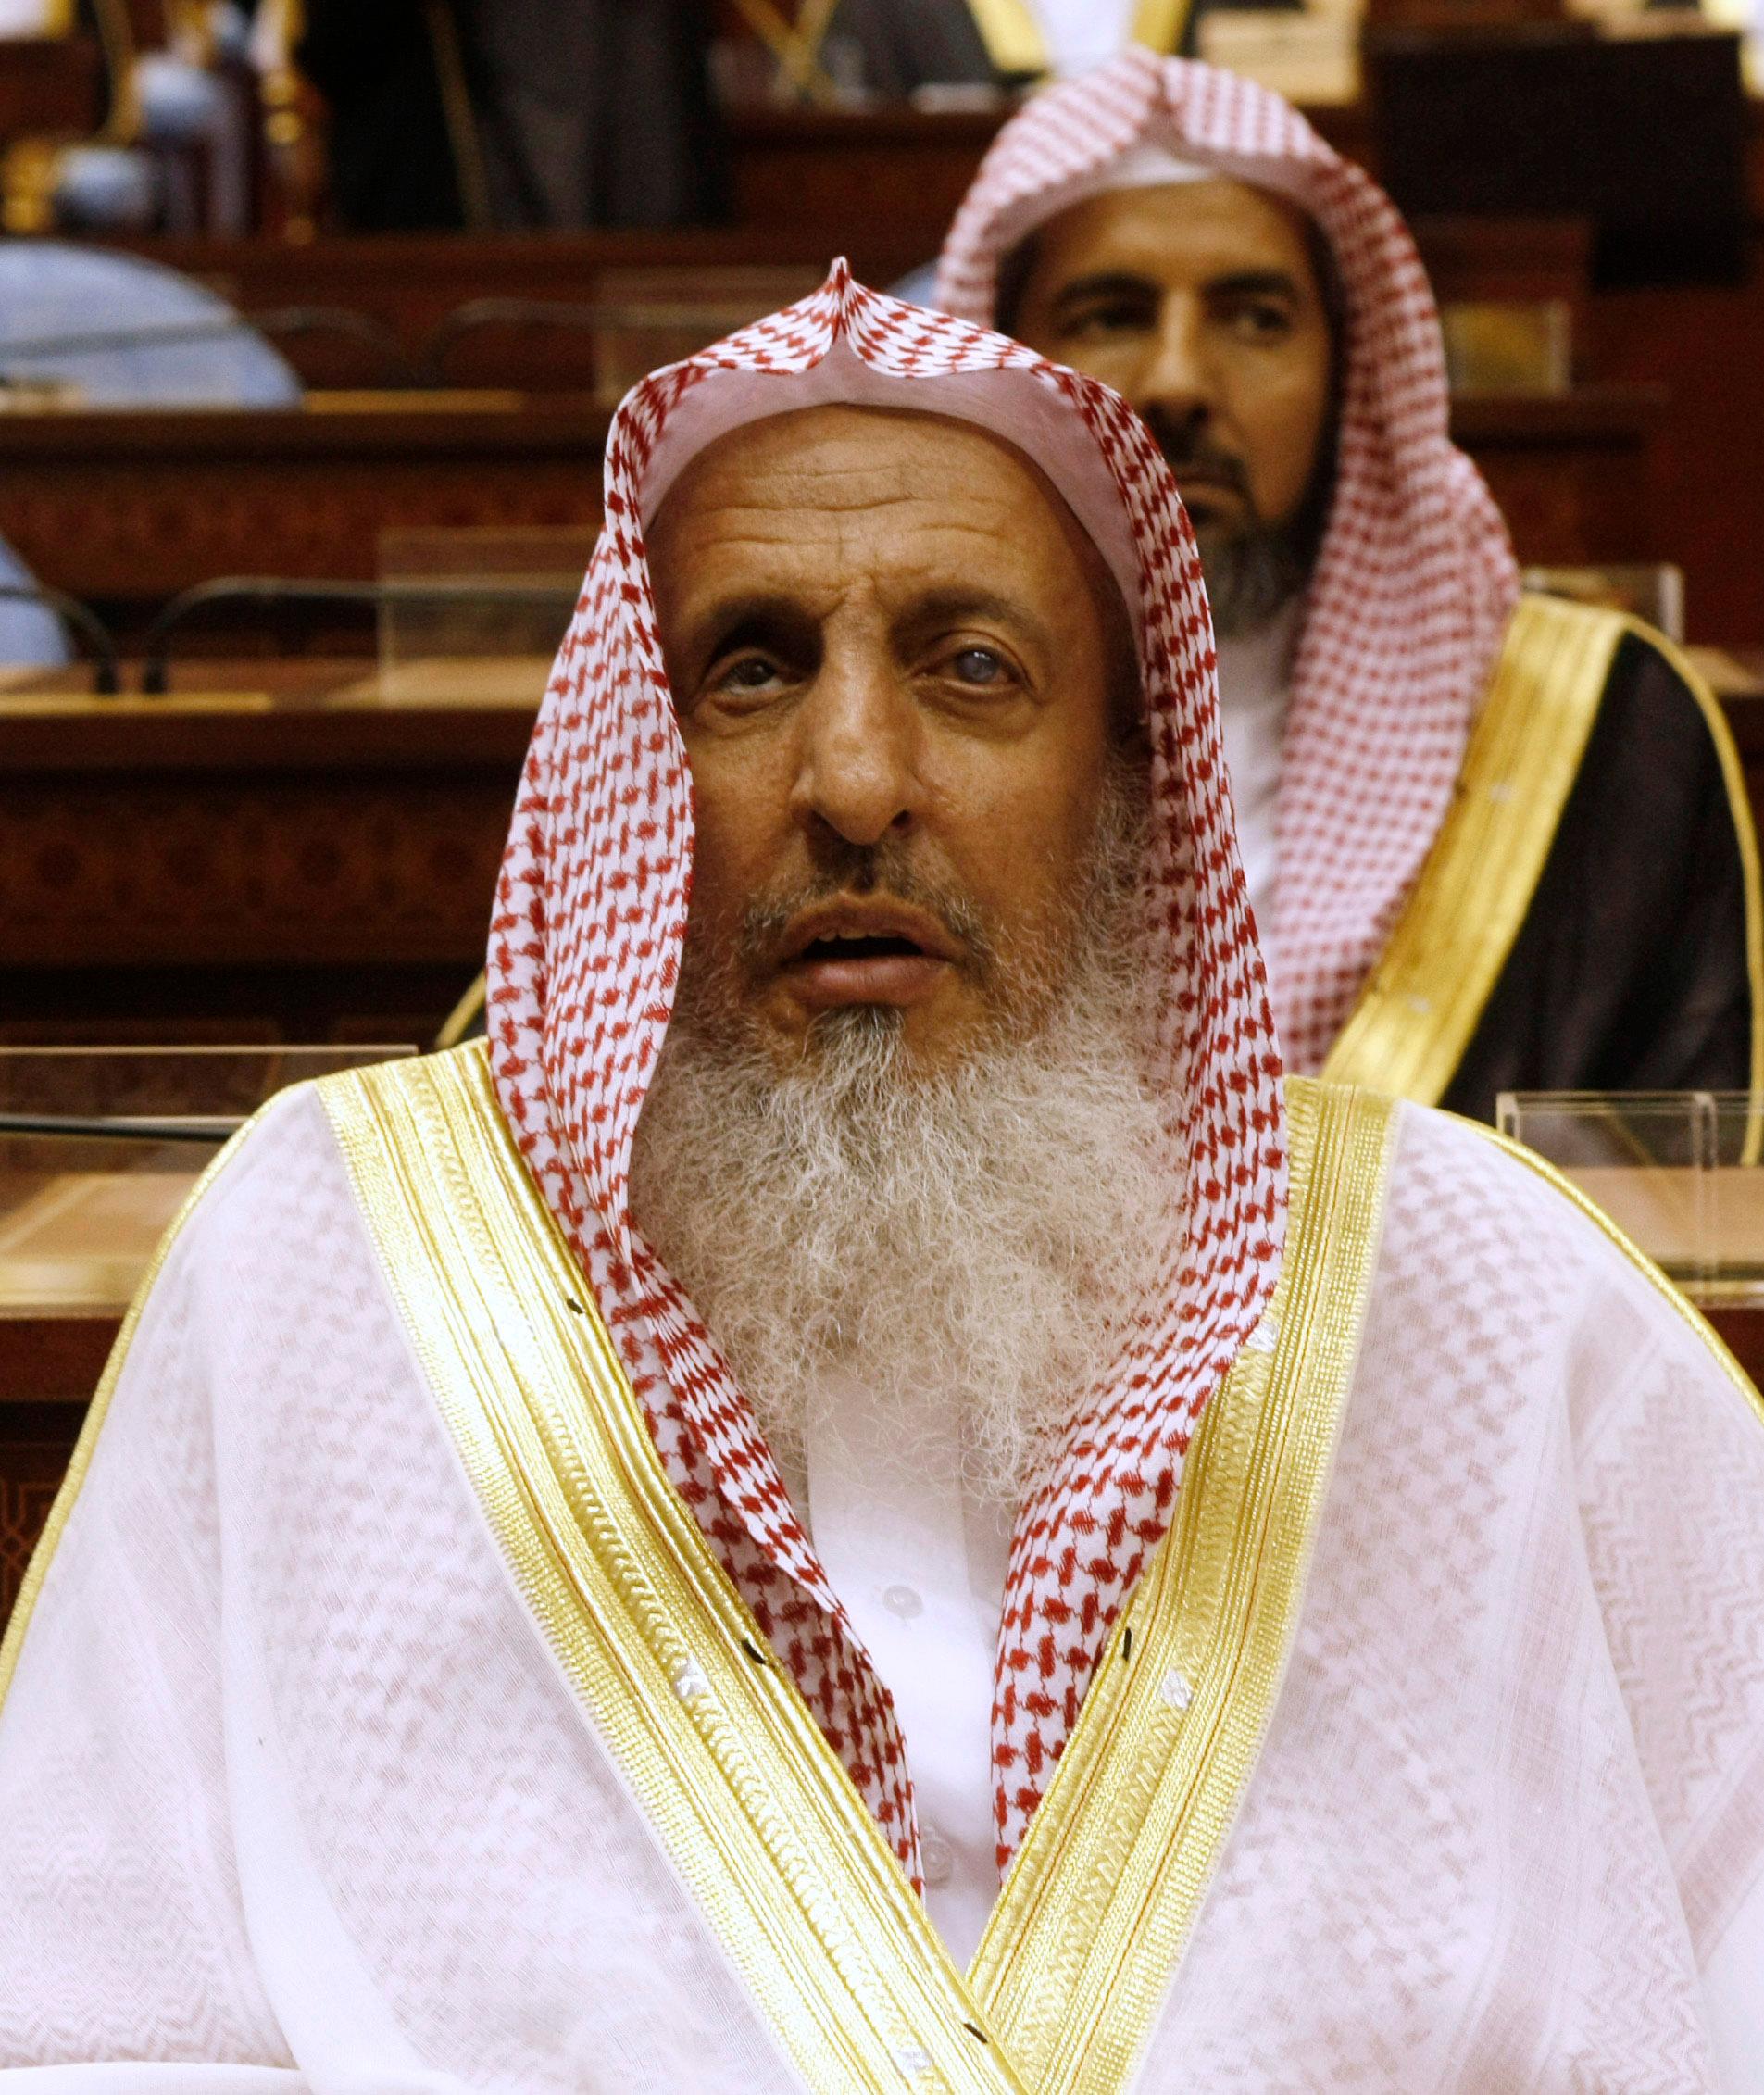 Sheikh Abdul Aziz al-Sheikh, the Saudi grand mufti listens to a speech of King Abdullah of Saudi Arabia at the Consultative Council in Riyadh, Saudi Arabia, March 24, 2009.